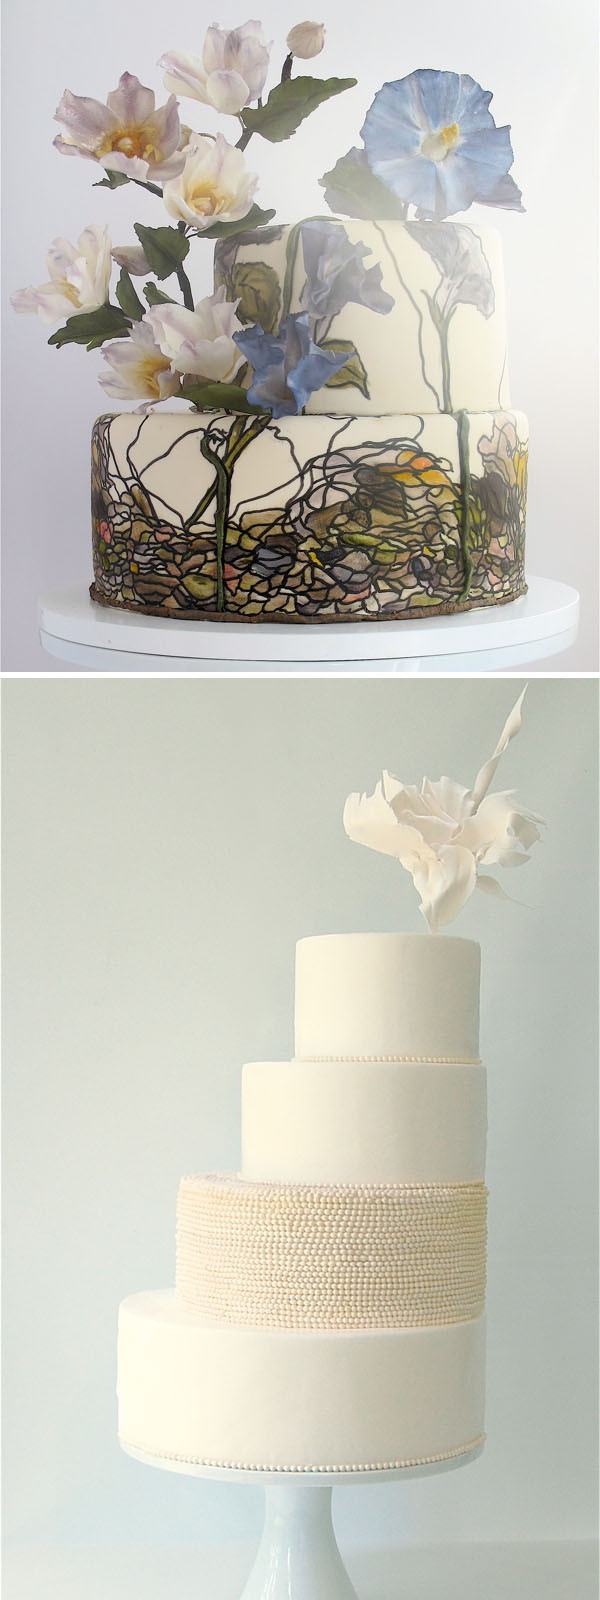 Austin Wedding Cakes
 Wedding Cake Artists